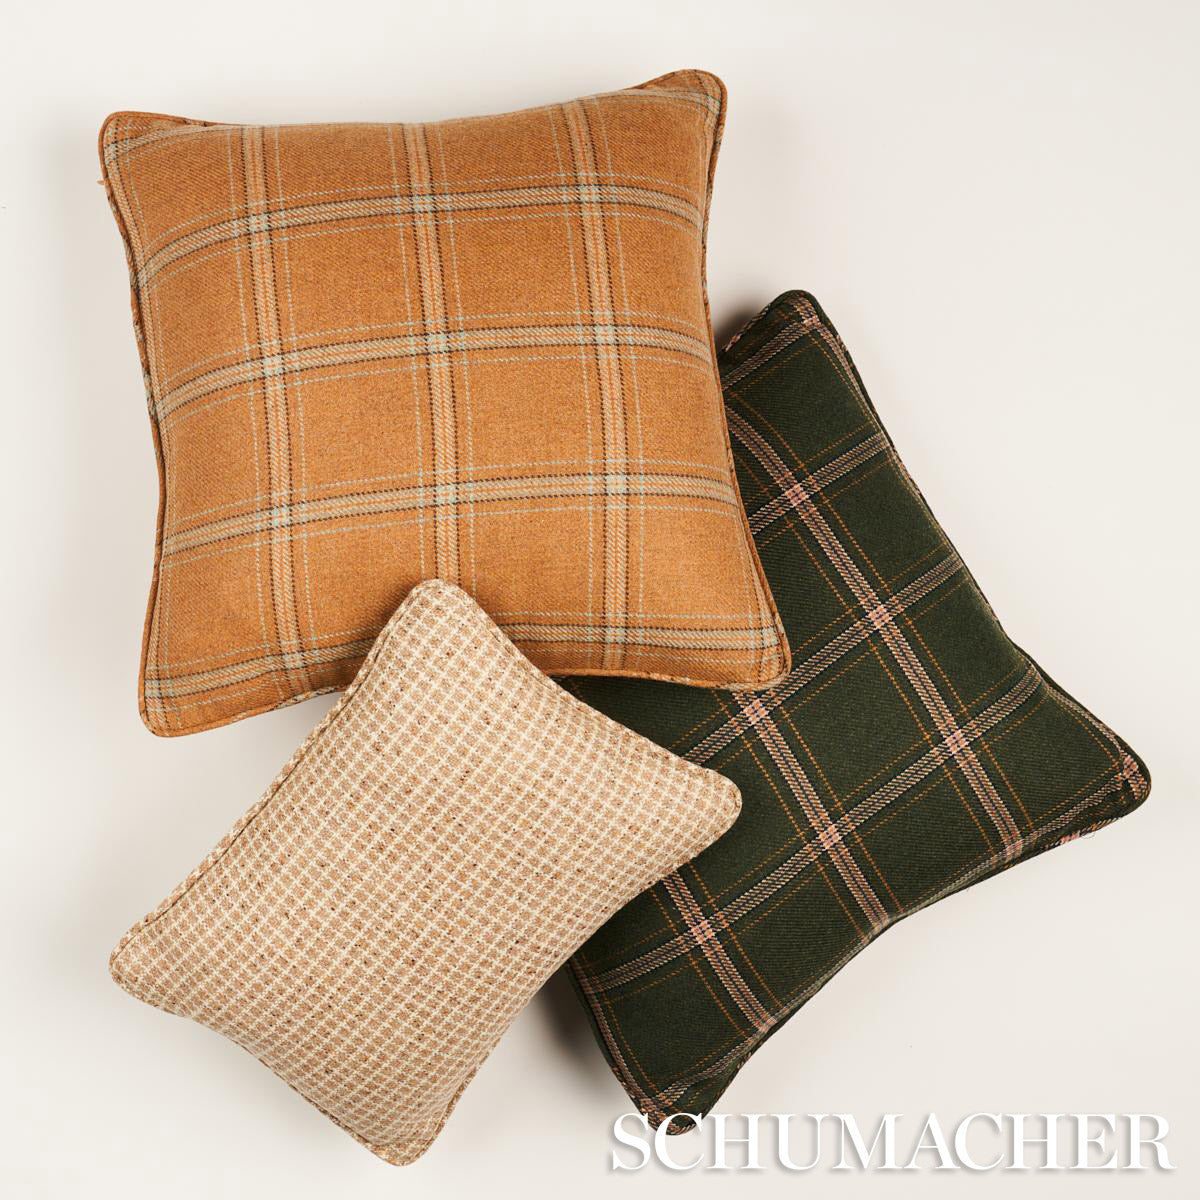 Purchase So8234305 | Blackburn Merino Plaid Pillow, Green - Schumacher Pillows